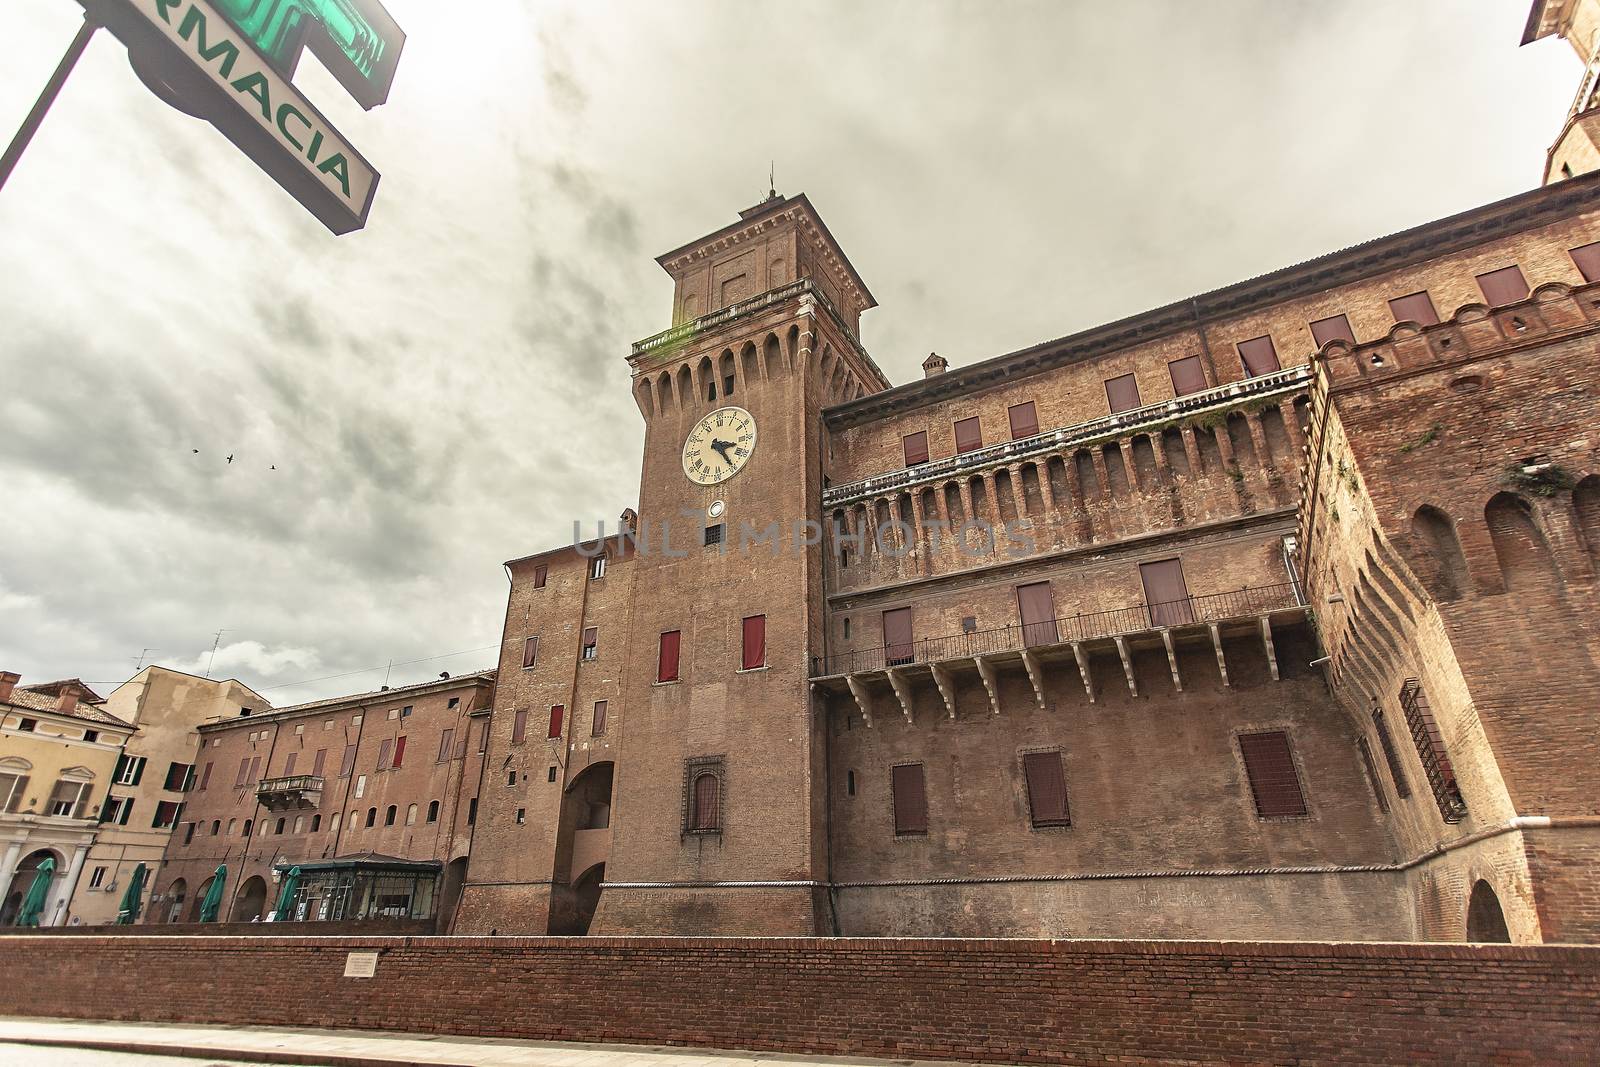 FERRARA, ITALY 29 JULY 2020 : Ferrara's medieval castle in Italy